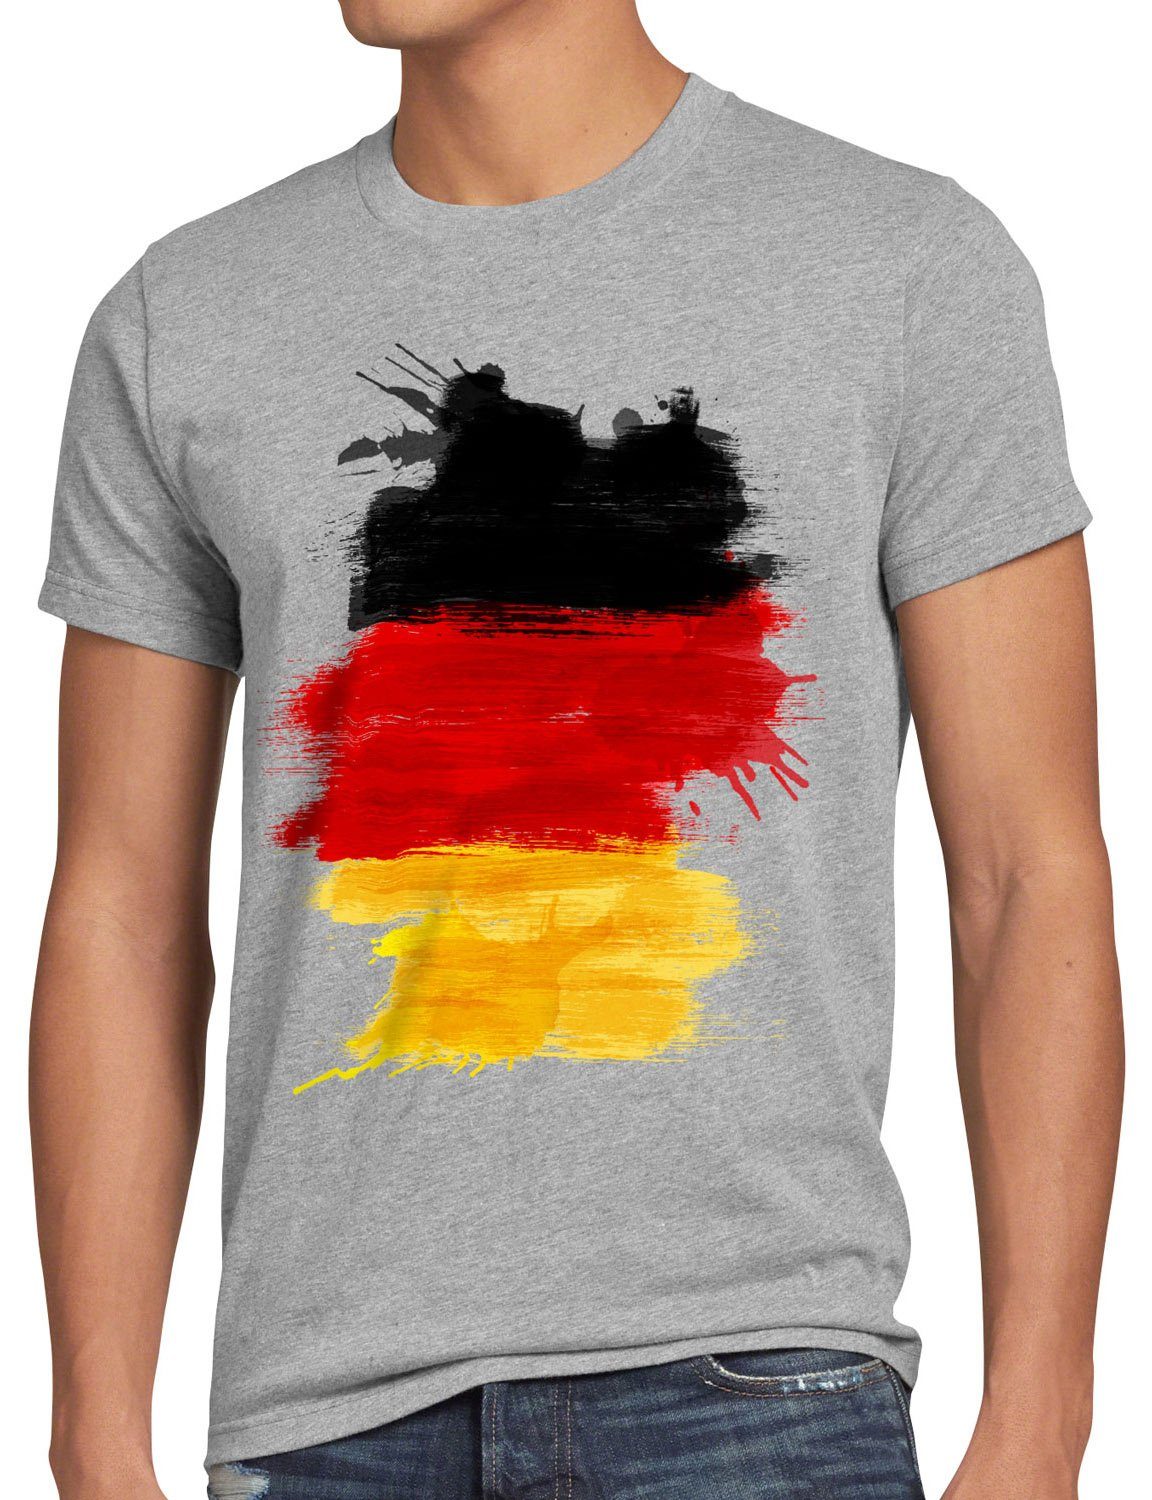 style3 Print-Shirt Herren T-Shirt Flagge Deutschland Fußball Sport Germany WM EM Fahne grau meliert